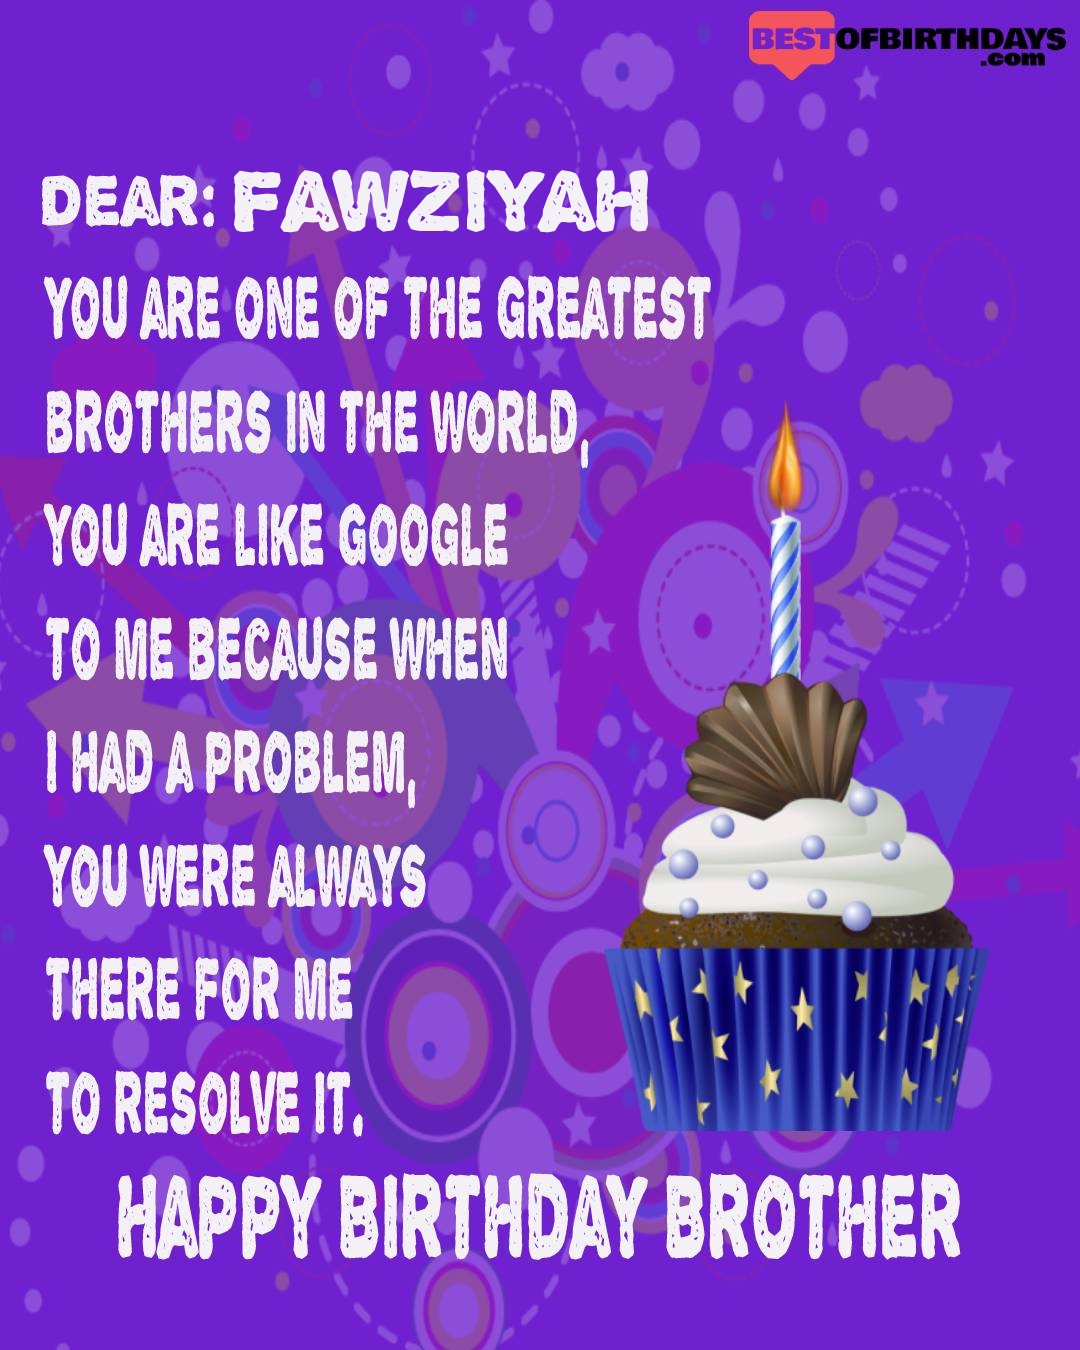 Happy birthday fawziyah bhai brother bro